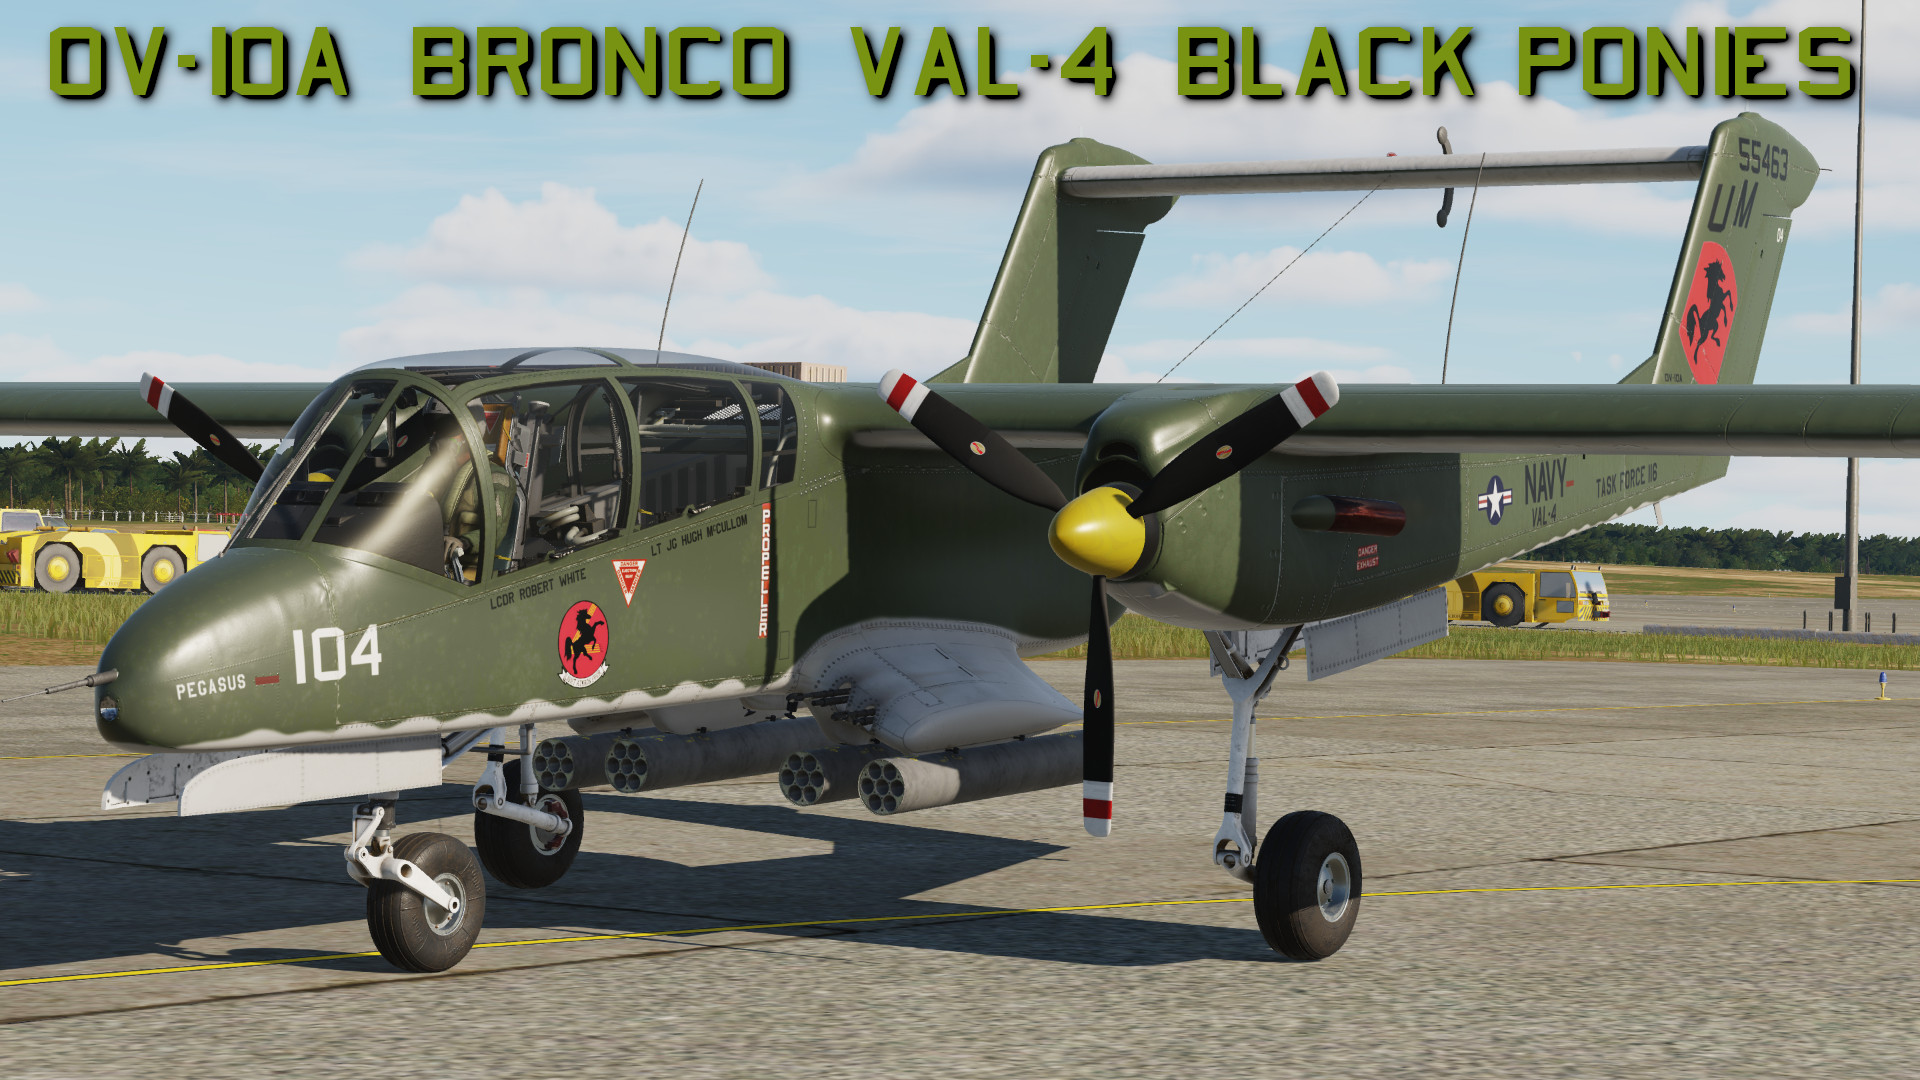 OV-10A Bronco - VAL-4 "Black Ponies" #104 - Skin